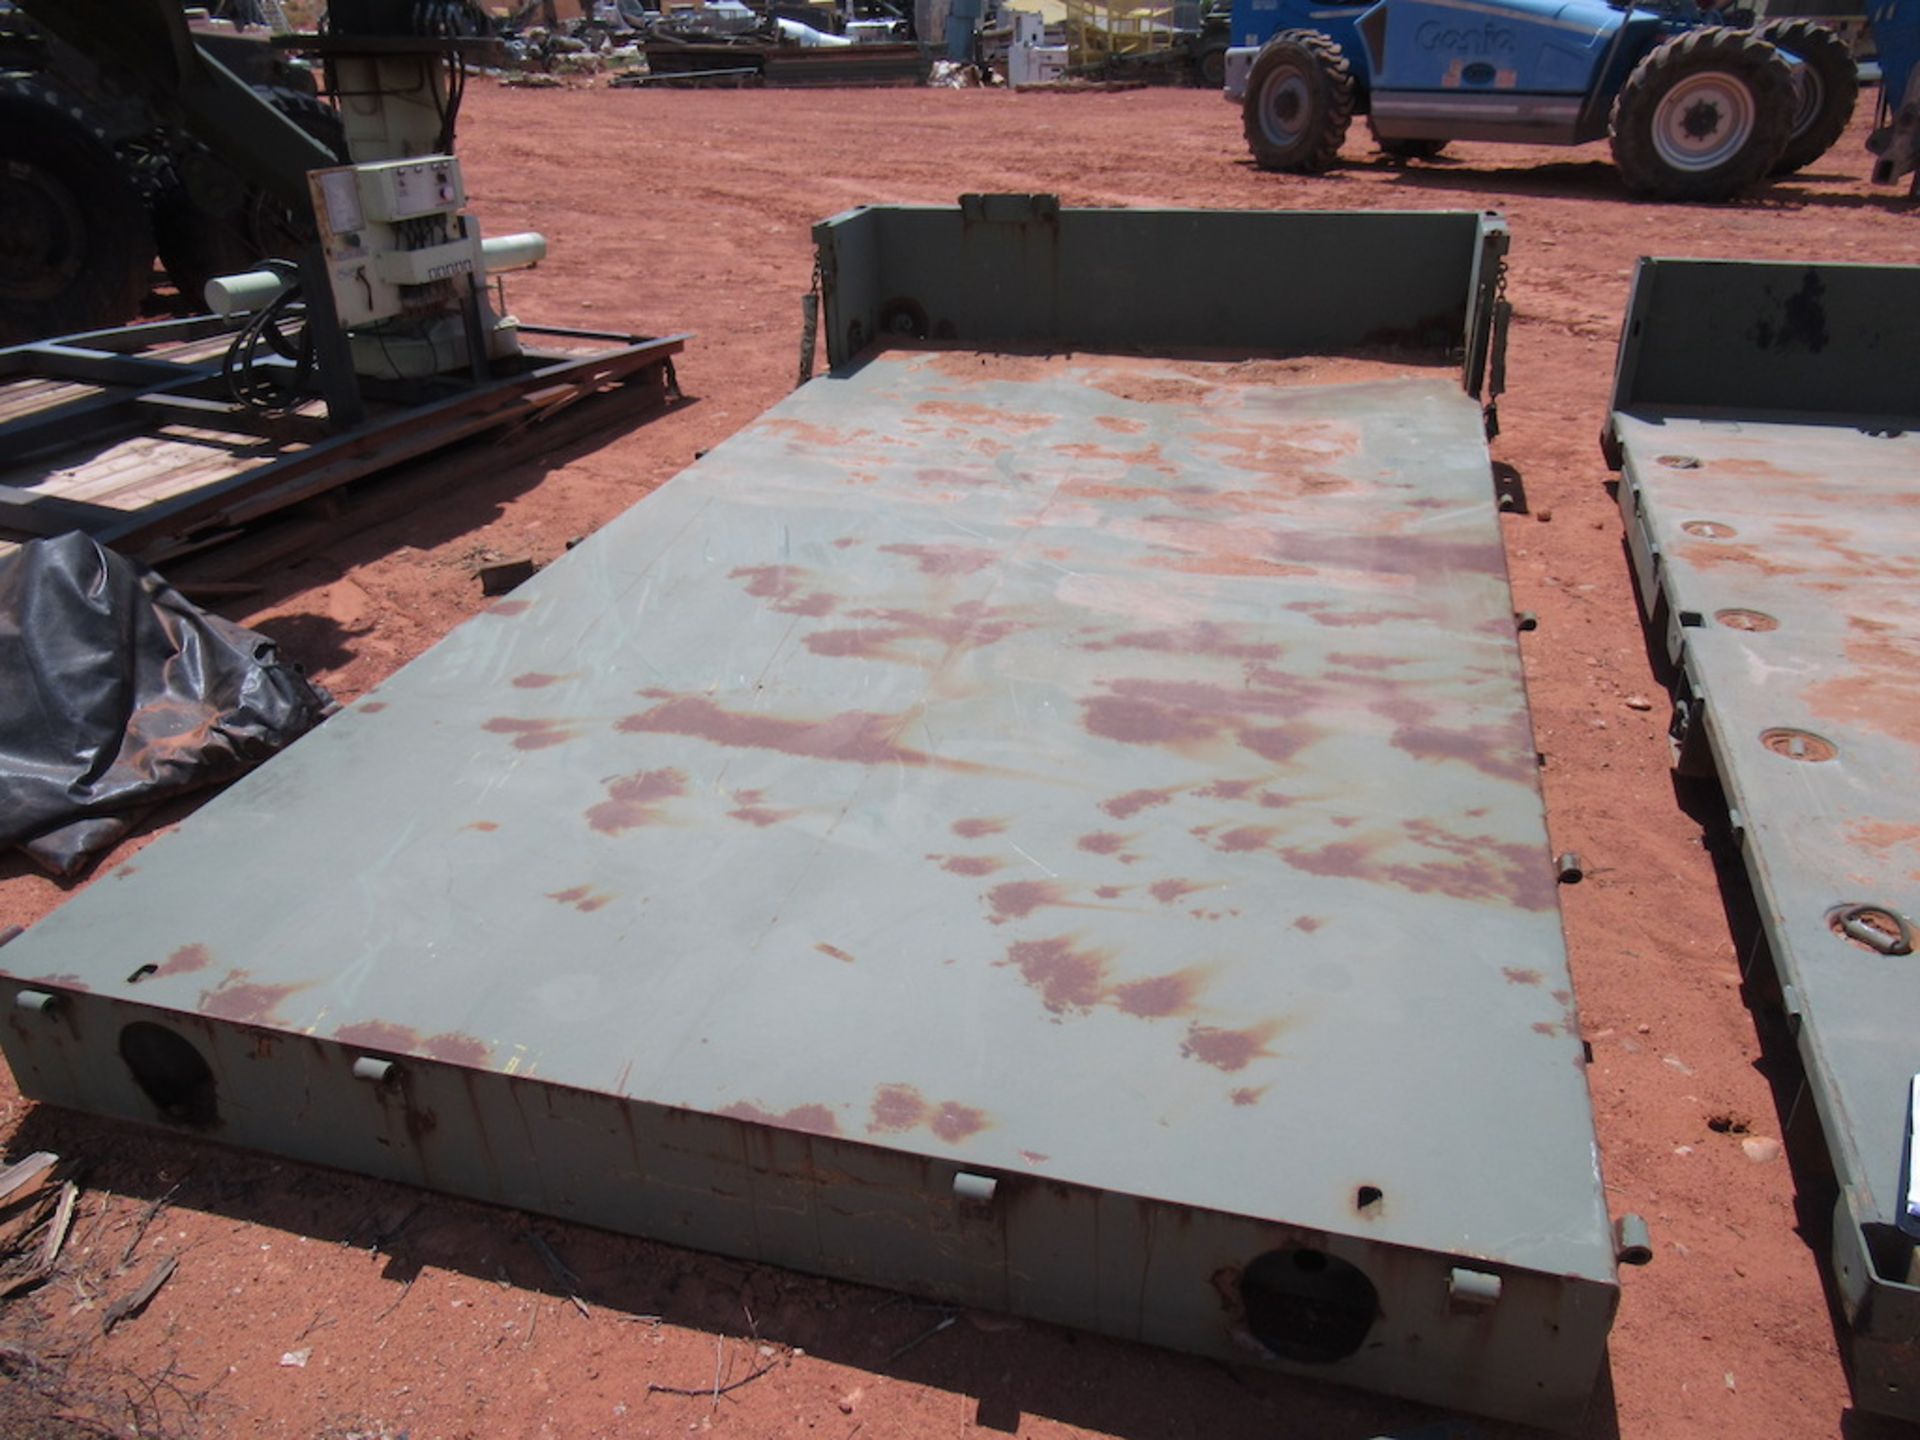 14 Fy. Steel Military Flat Bed, 1, 1964 lbs, 173"x96"x33", ISLE 1 POD 13 - Image 5 of 10